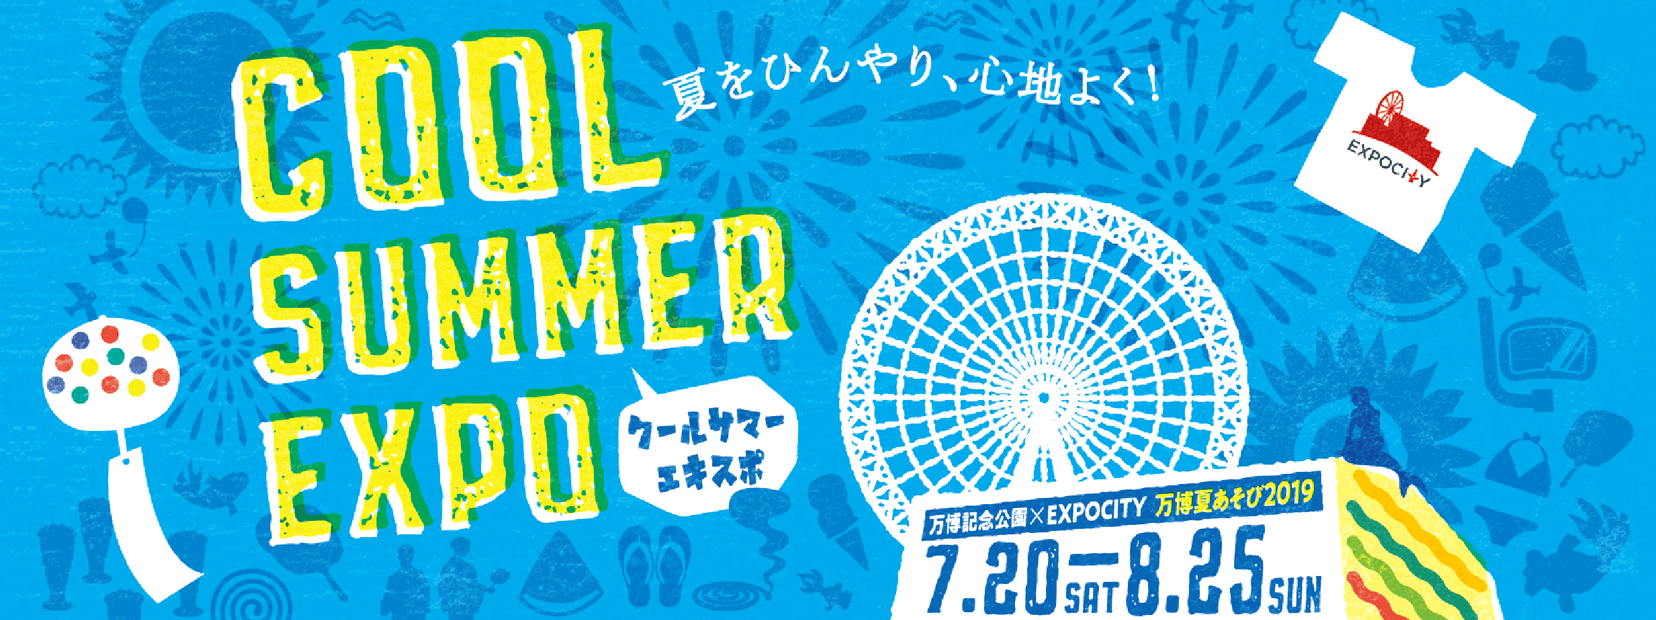 COOL SUMMER EXPO クールサマーエキスポ　夏をひんやり、心地よく！万博記念公園ｘEXPOCITY 万博夏あそび2019 7.20(sat)-8.25(sun)